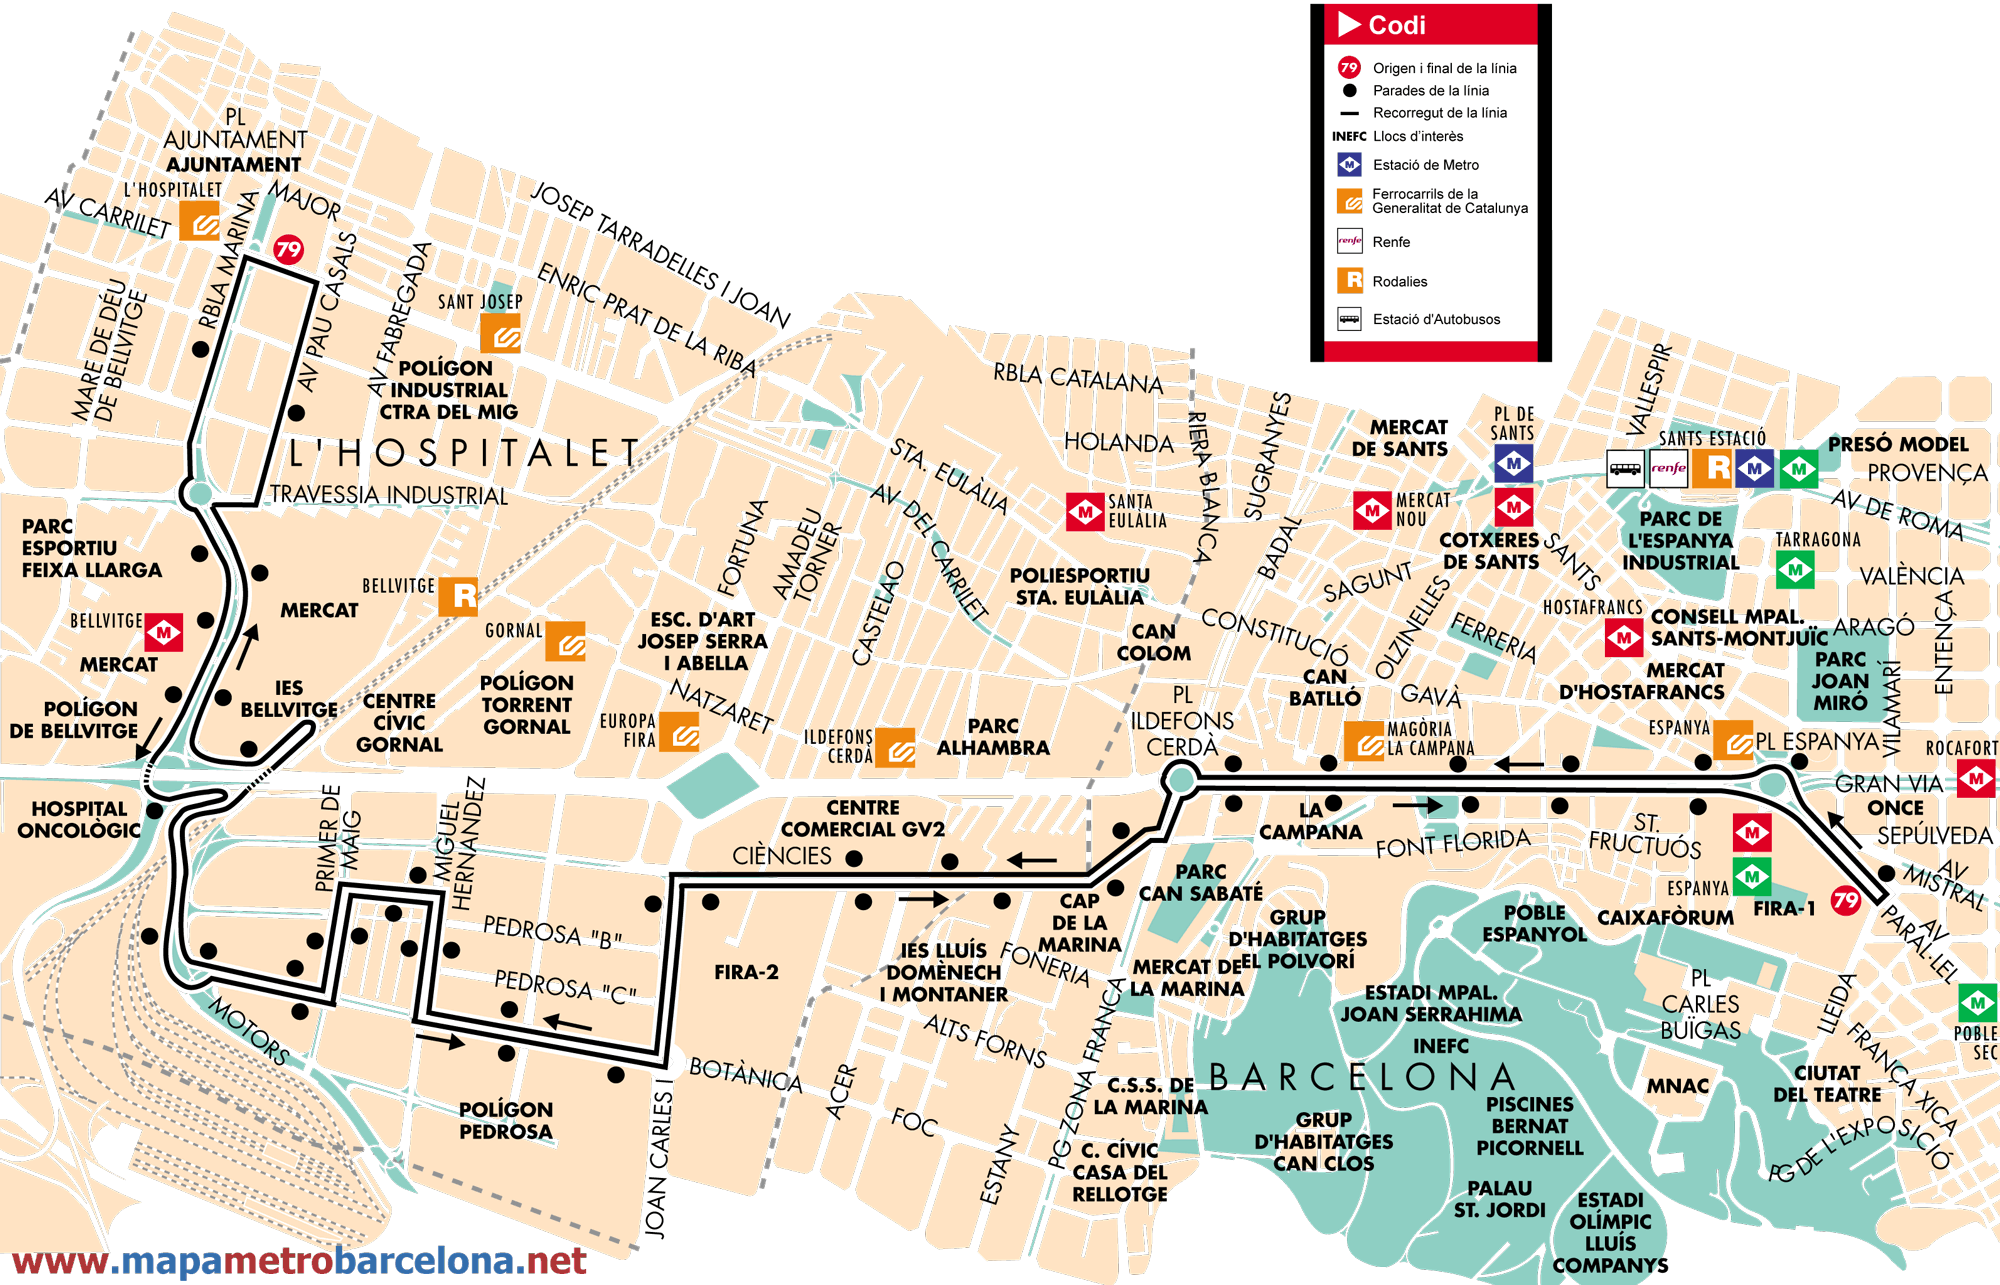 Barcelona bus map line 79